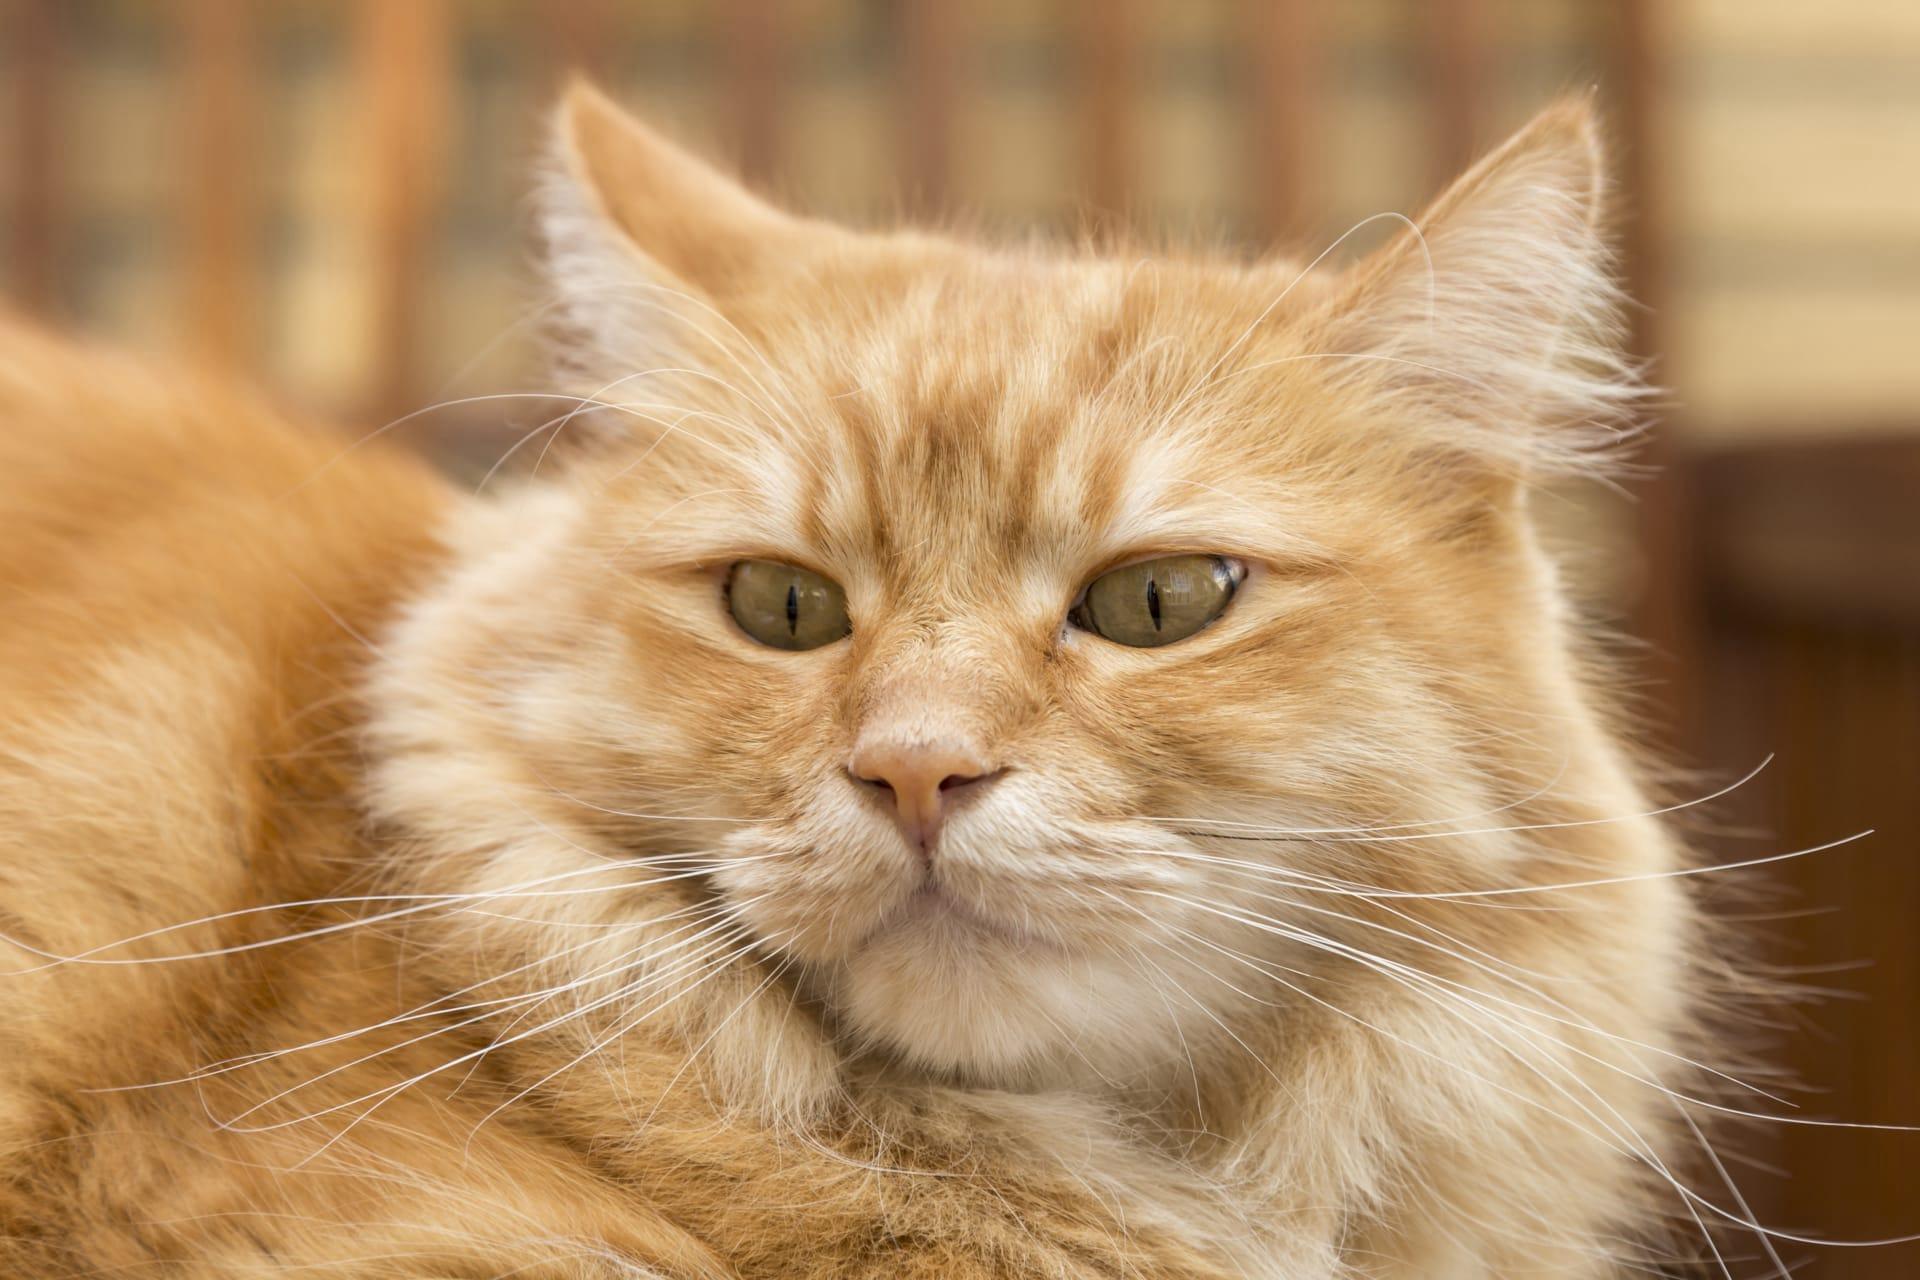 Oriental longhair cat pictures